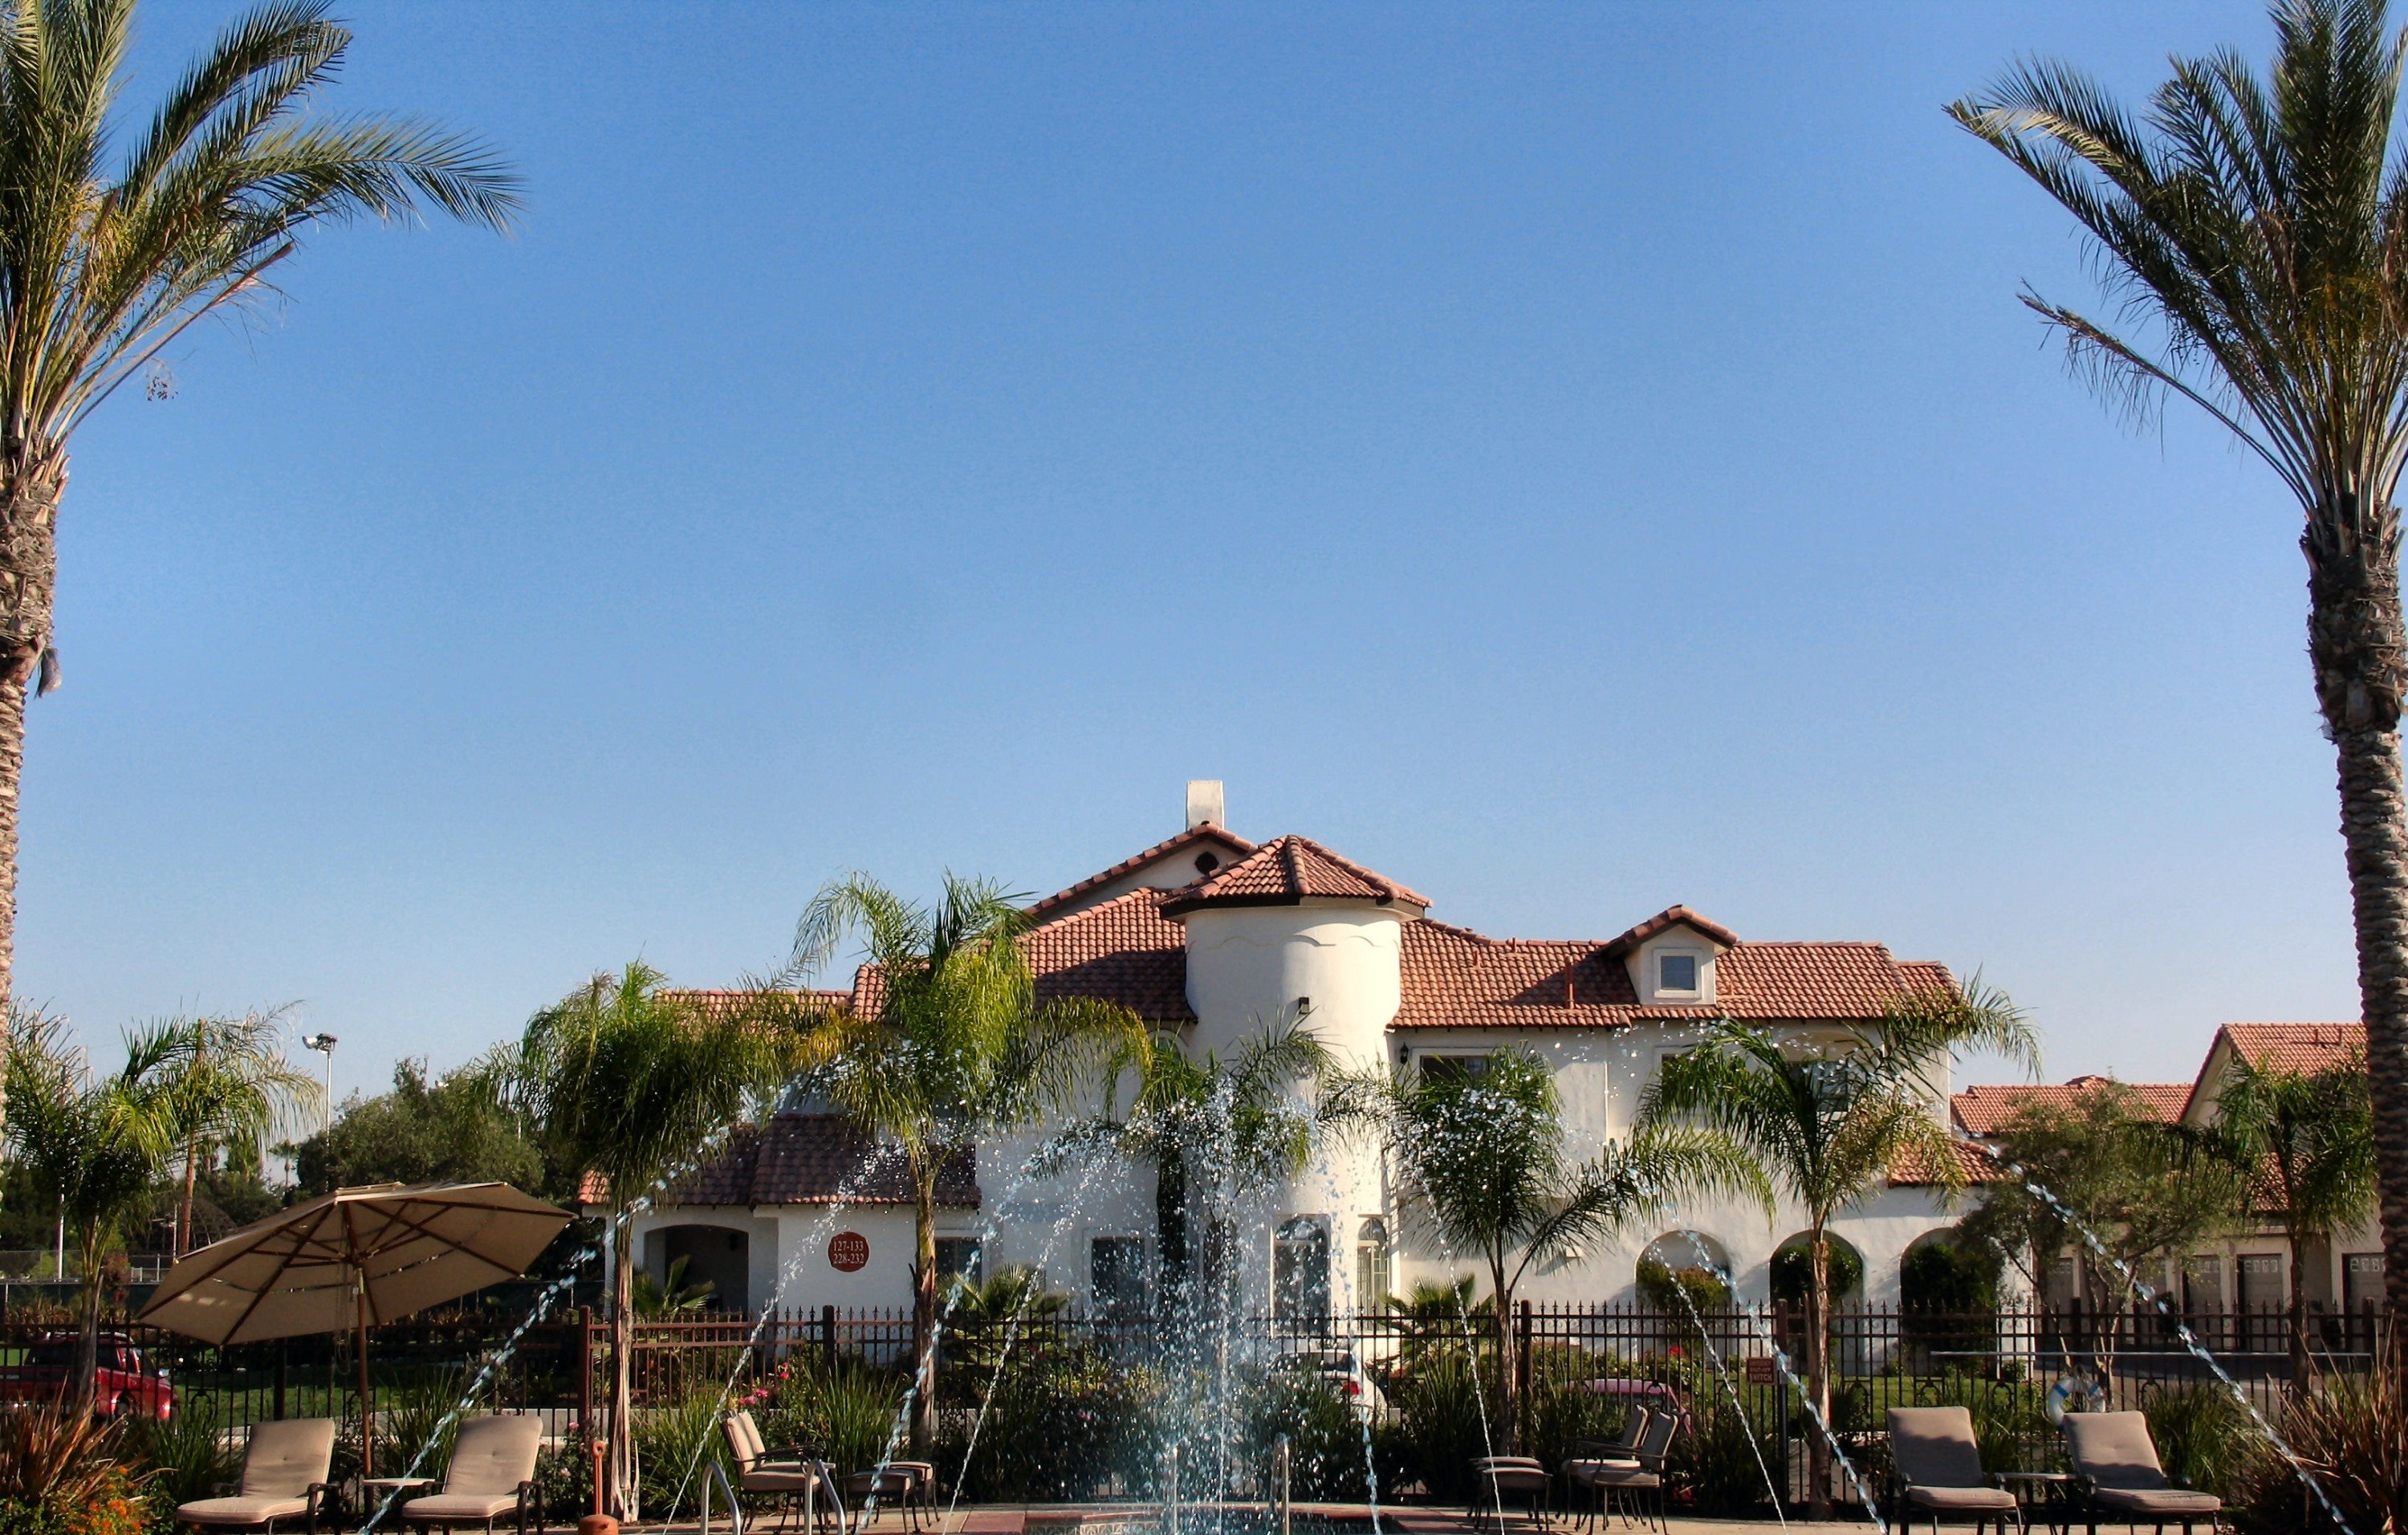 Dominion Courtyard Villas Apartments In Fresno Ca